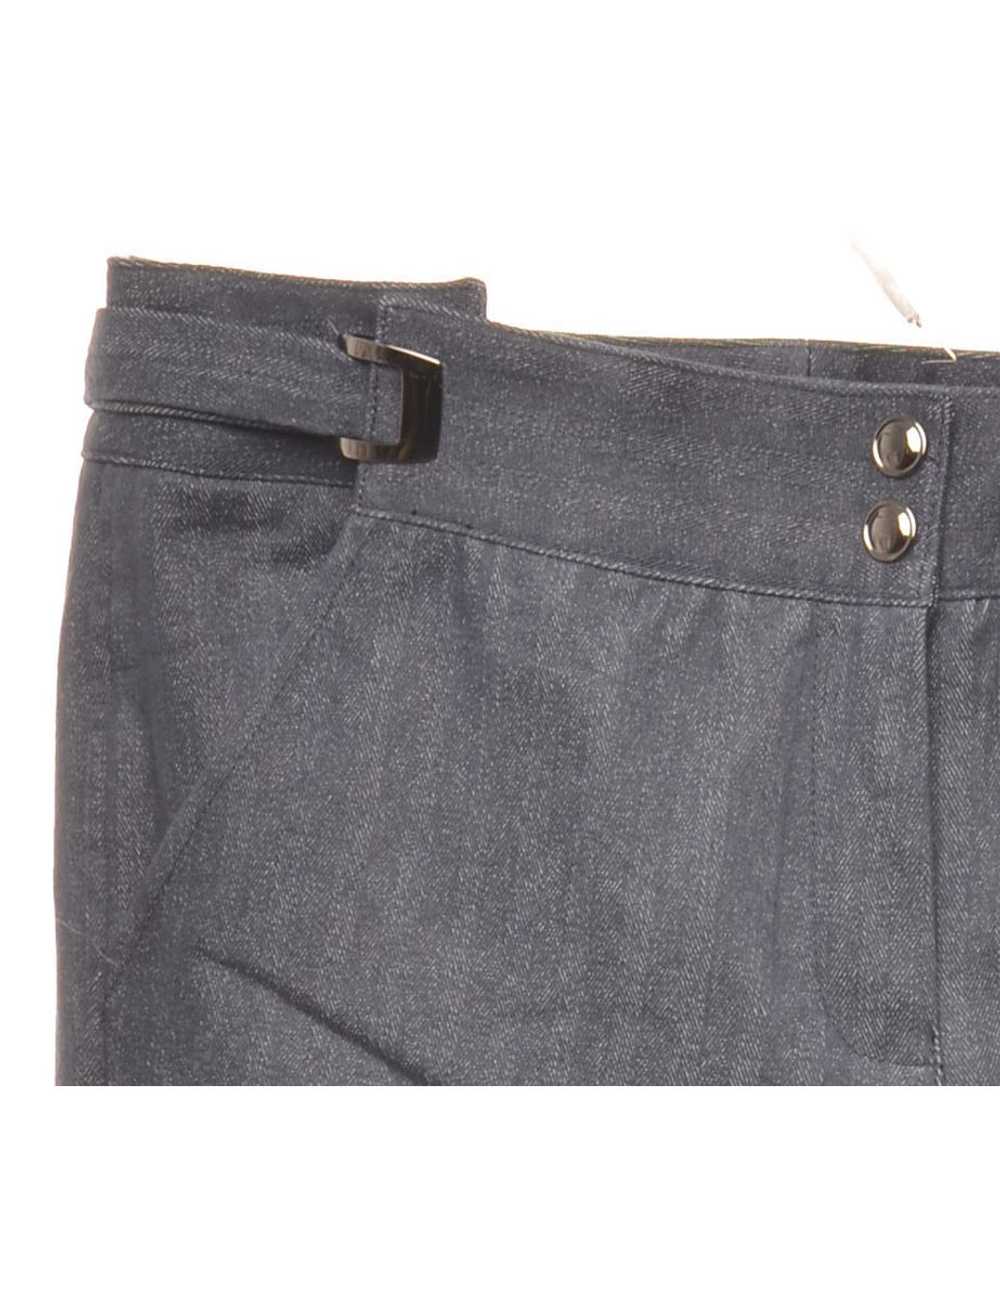 Grey Striped Flared Jeans - W32 L34 - image 3